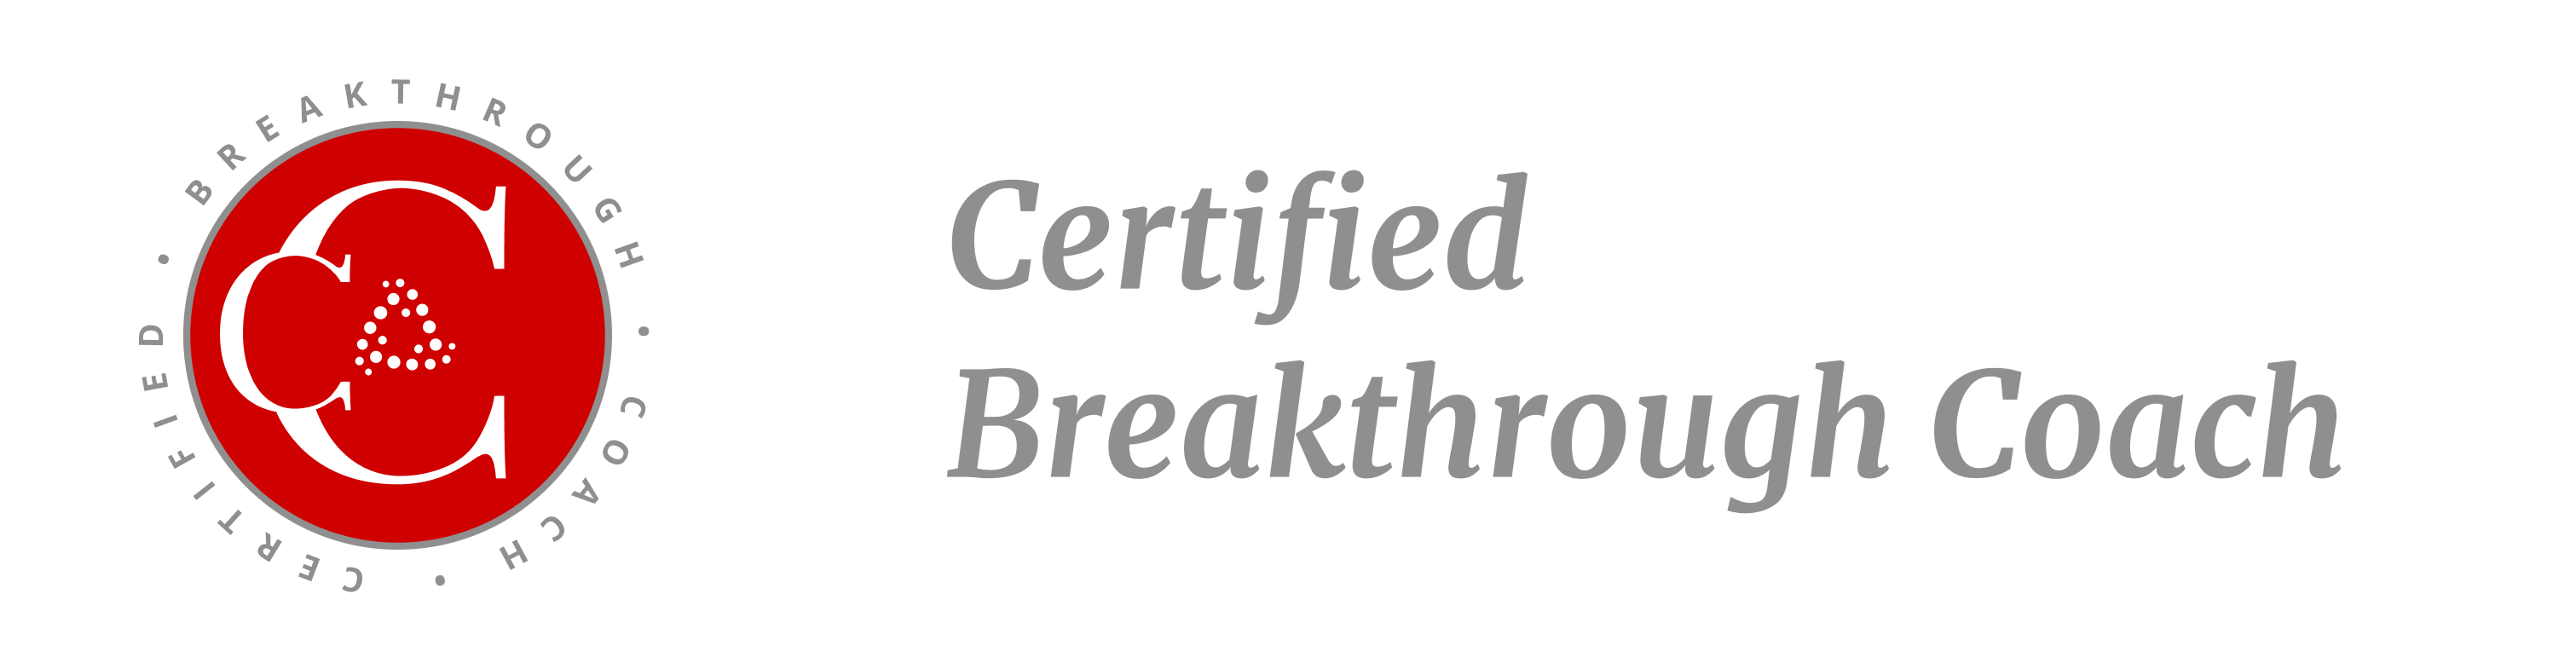 Certifed Breakthrough Coach